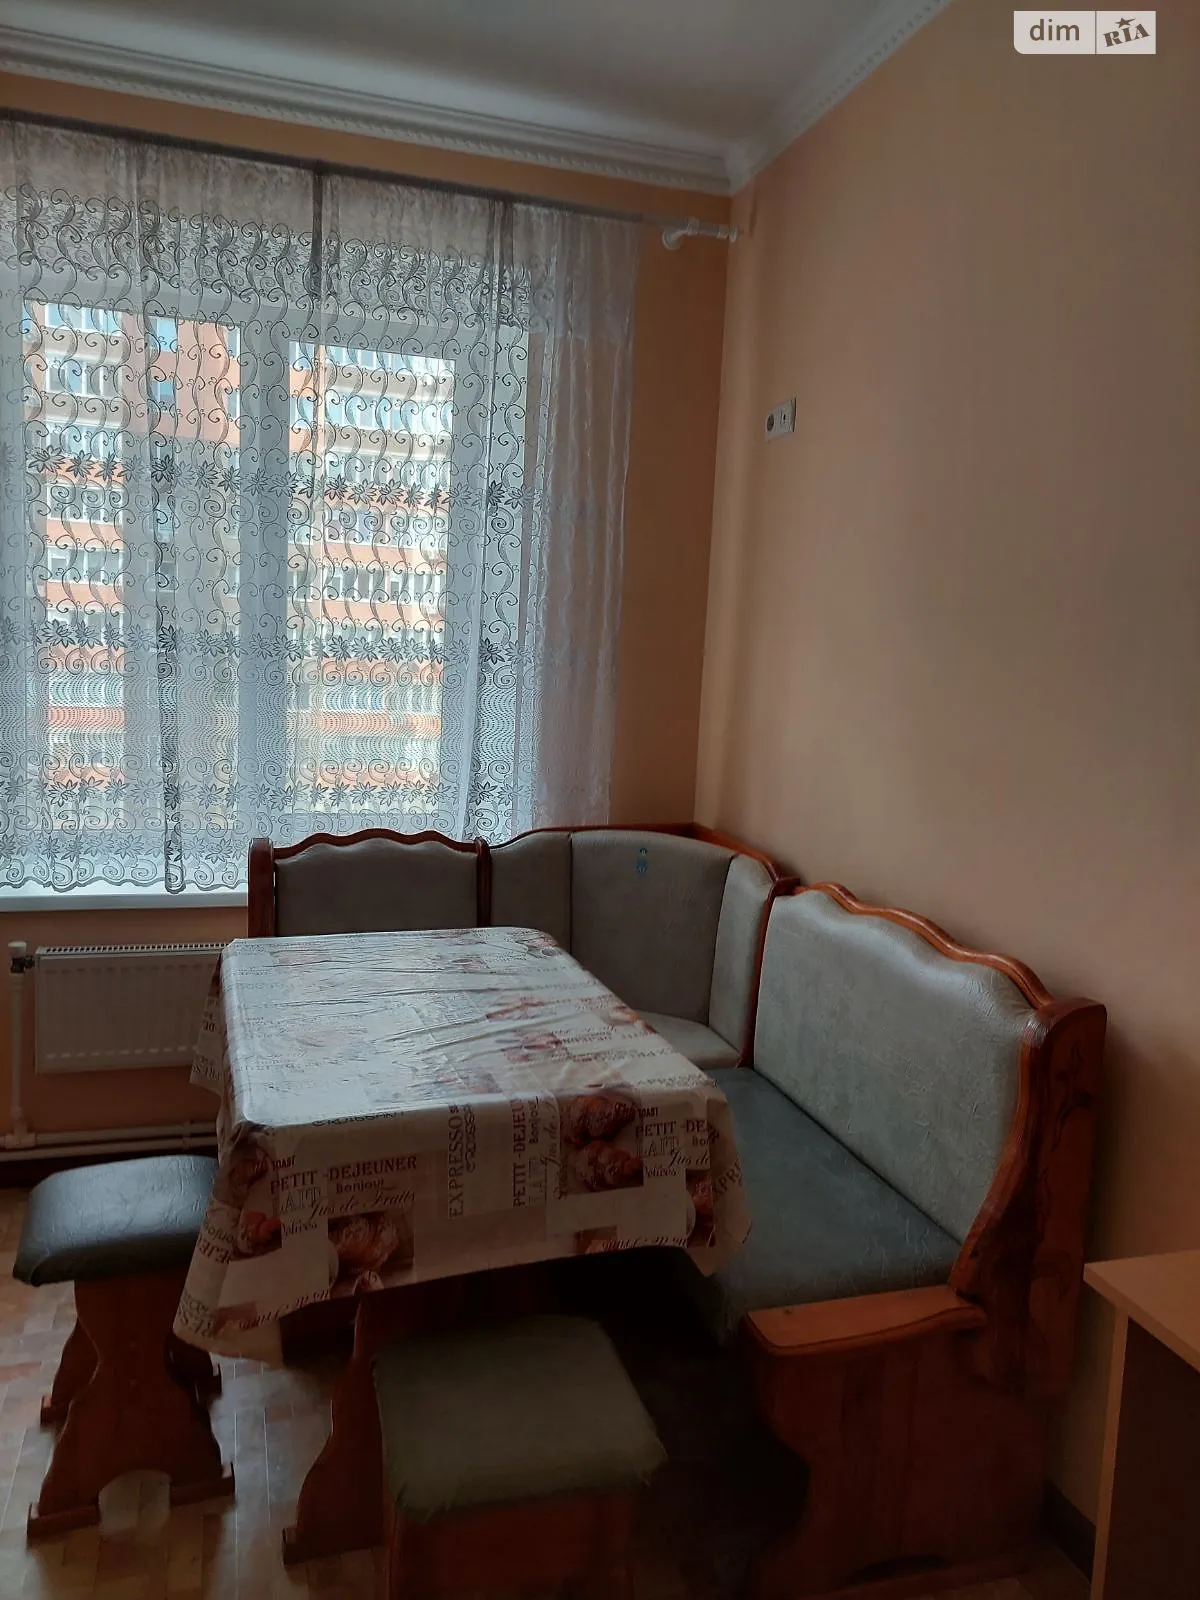 Сдается в аренду 1-комнатная квартира 45 кв. м в Виннице, ул. Вячеслава Черновола - фото 1